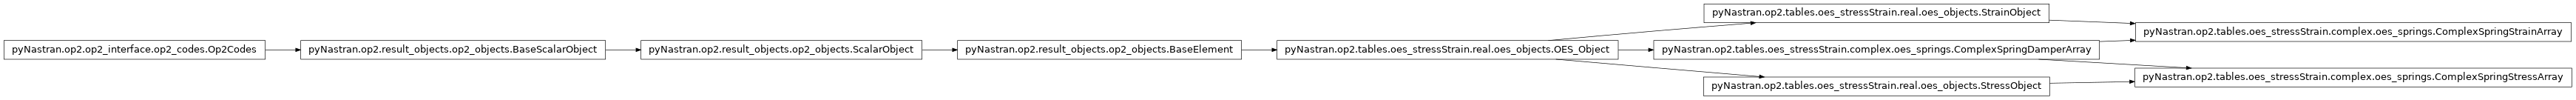 Inheritance diagram of pyNastran.op2.tables.oes_stressStrain.complex.oes_springs